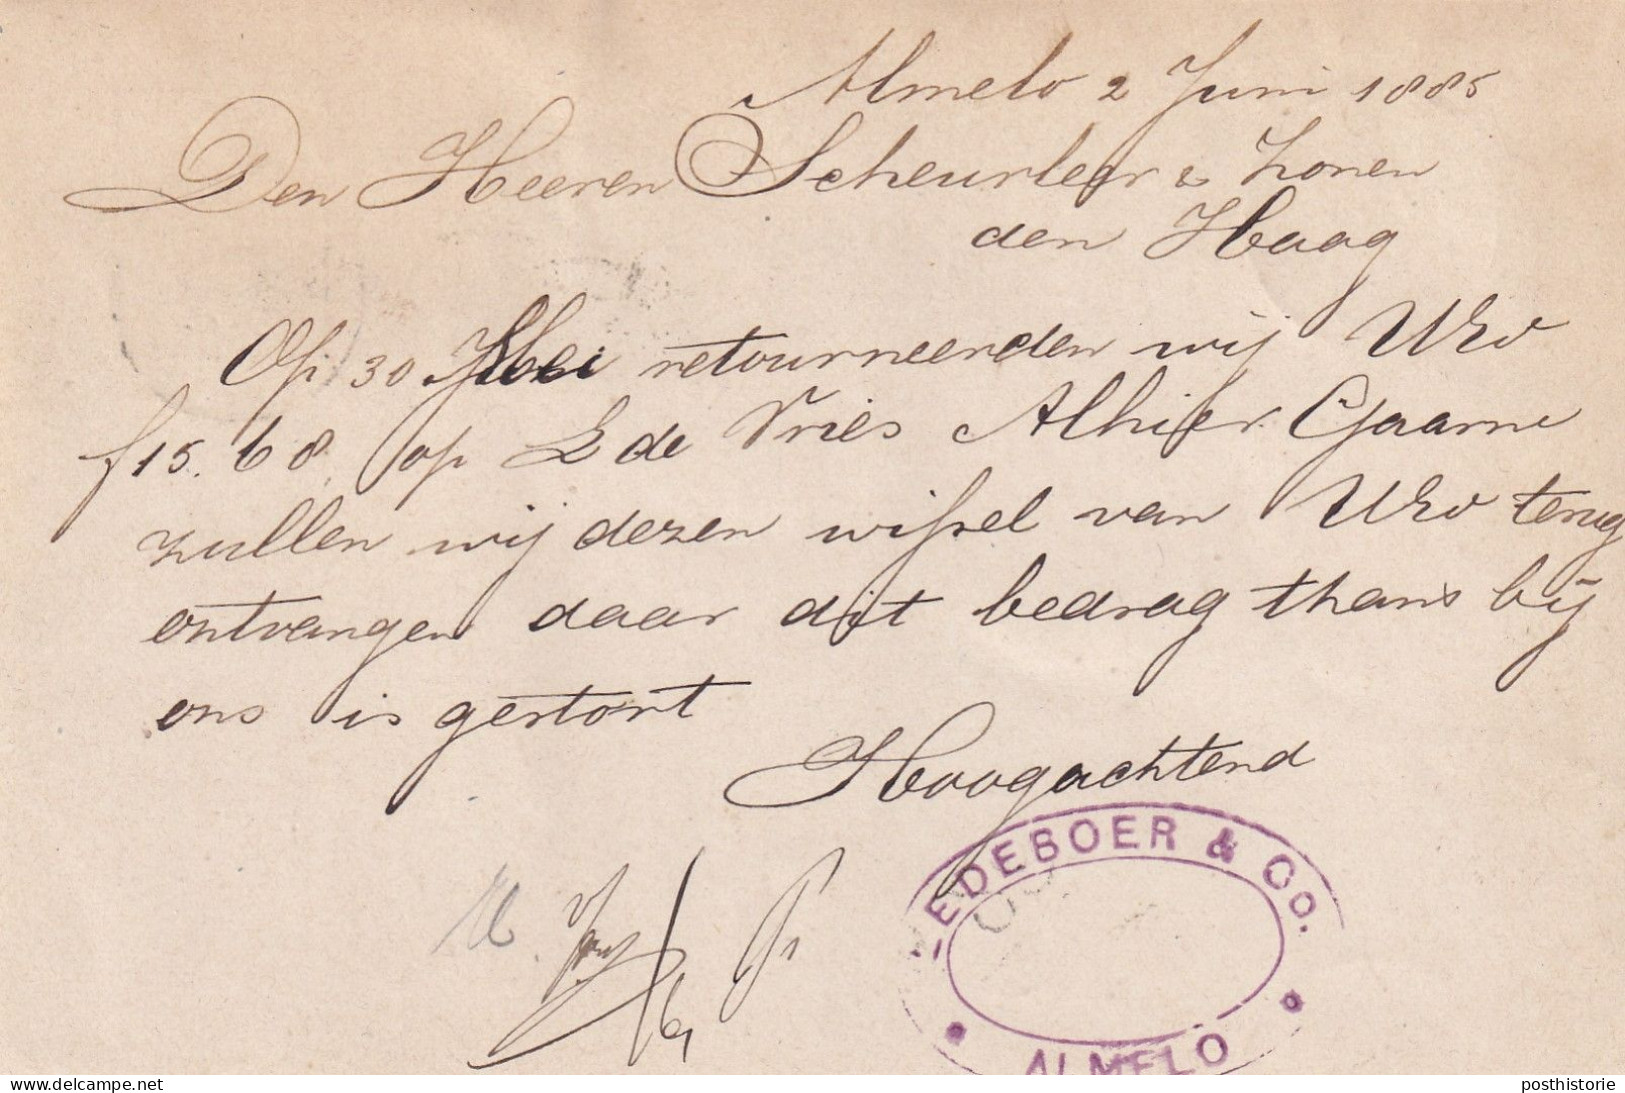 Briefkaart Met Firma Stempel 2 Jun 1885 Almelo (kleinrond) Naar 's Gravenhage (kleinrond) - Storia Postale